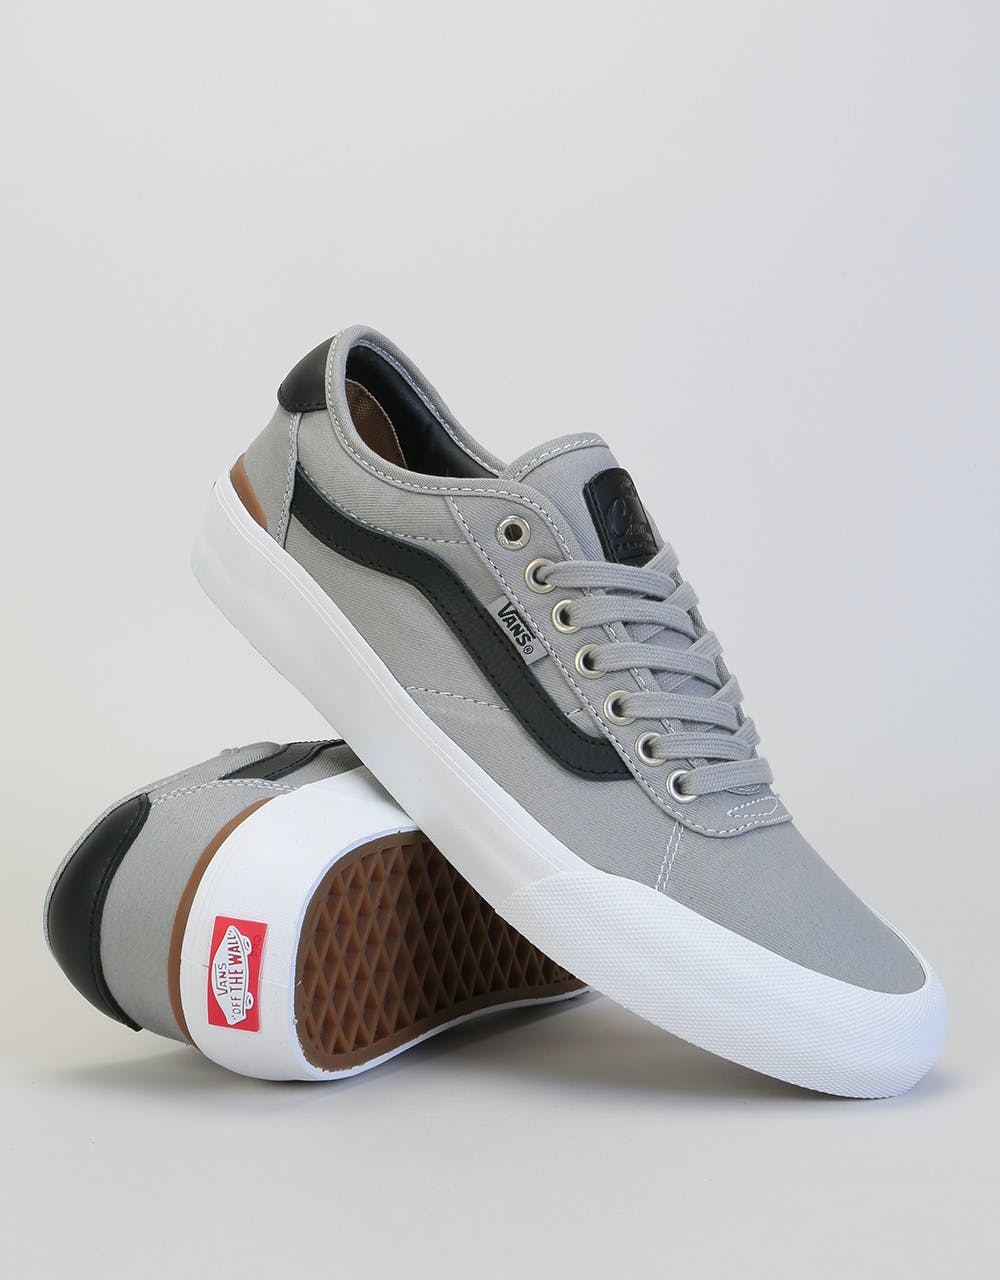 Vans Chima Pro II Skate Shoes - Drizzle/Black/White